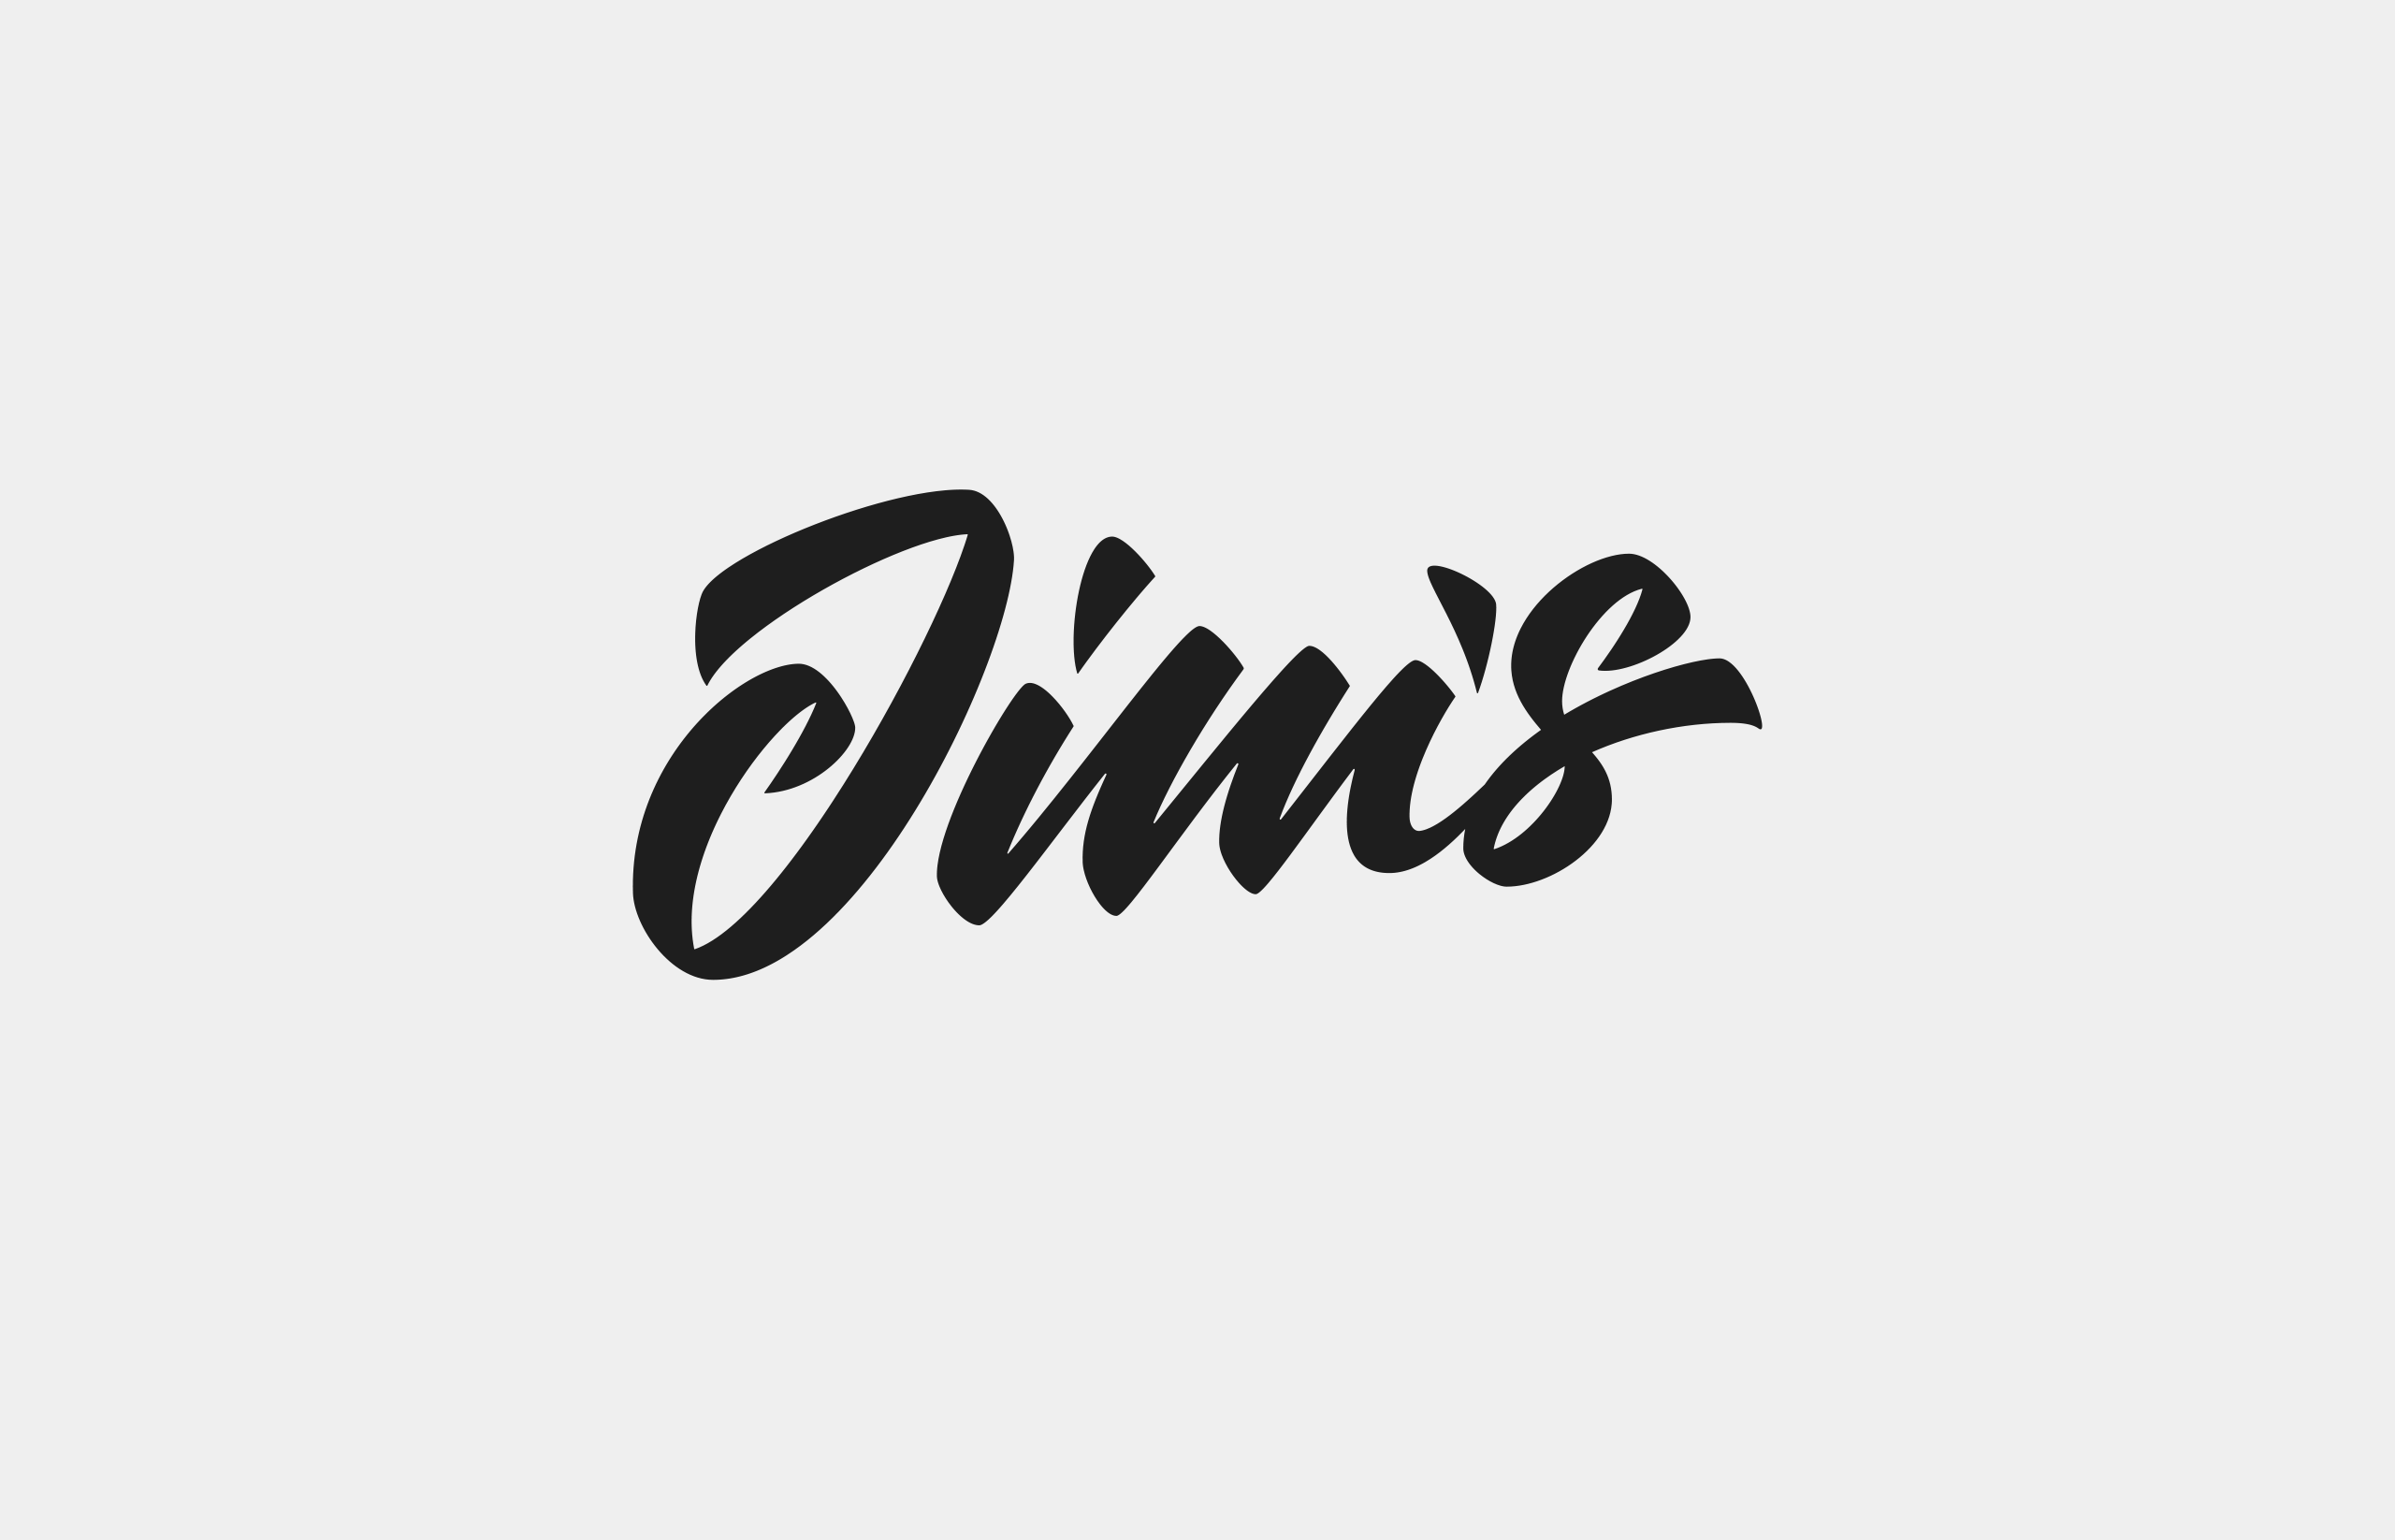 Jim’s bottle shop logotype